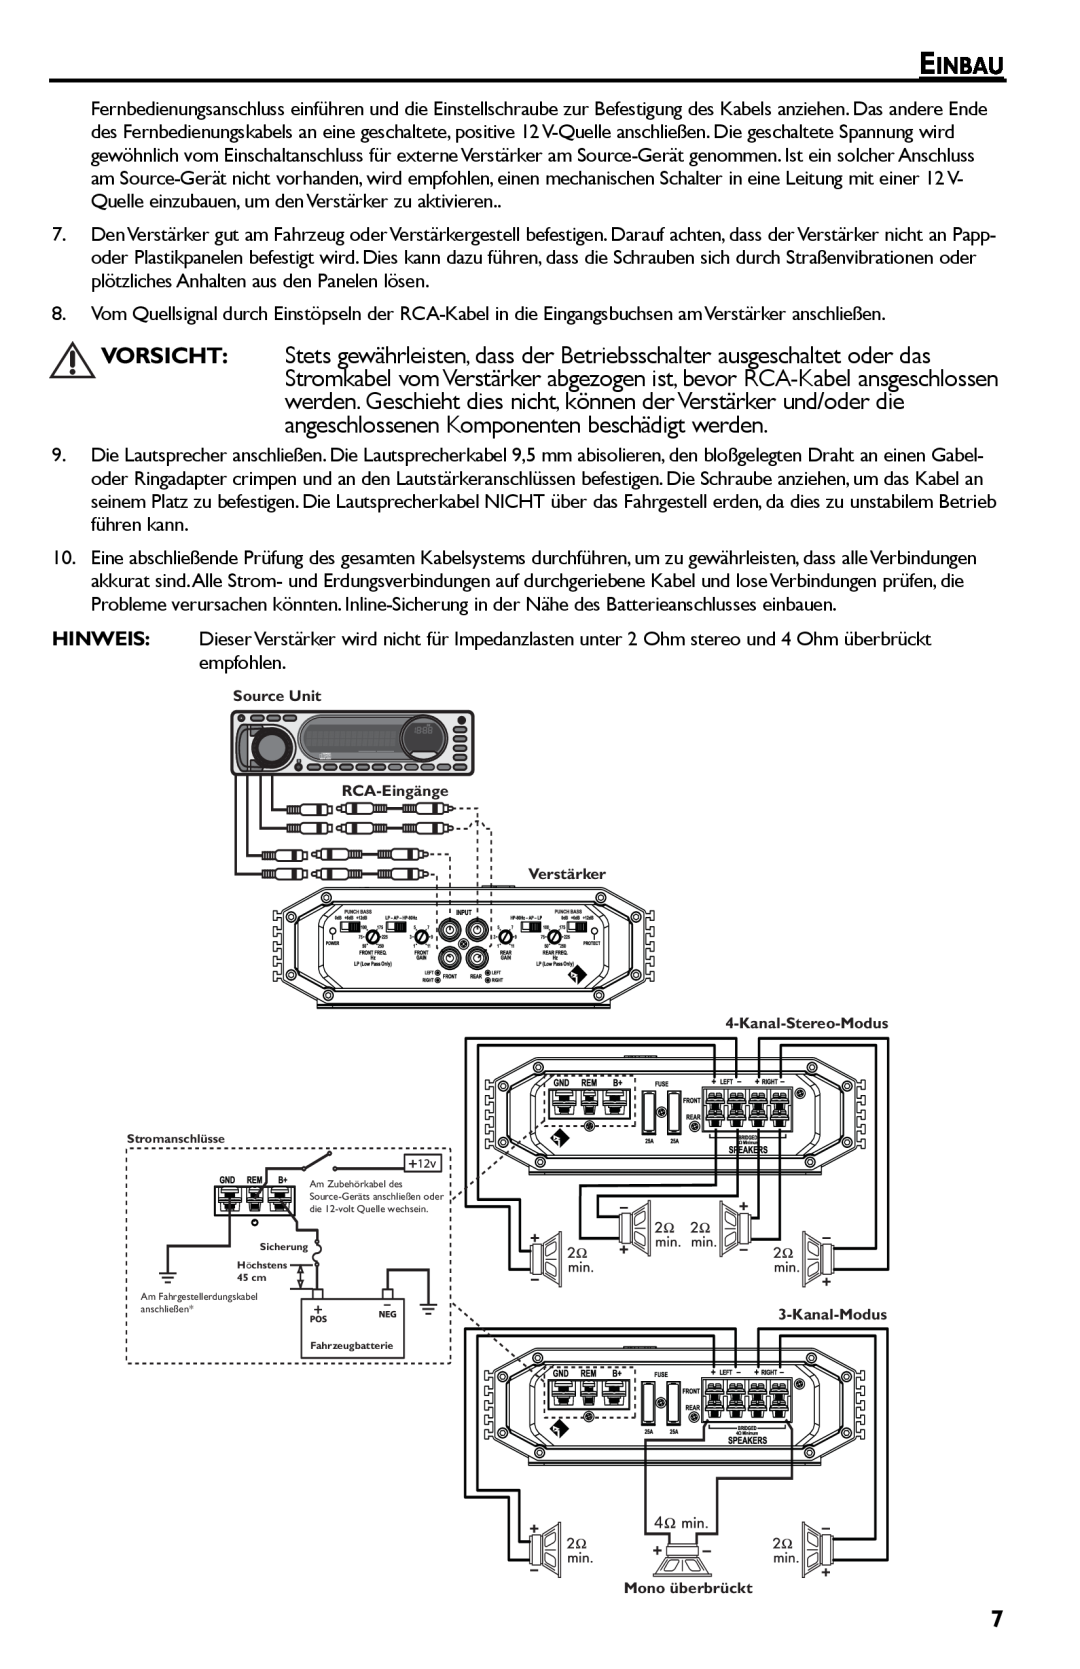 Rockford Fosgate R300-4 manual Source Unit RCA-Eingänge Verstärker, Mono überbrückt, Kanal-Stereo-Modus, Kanal-Modus 